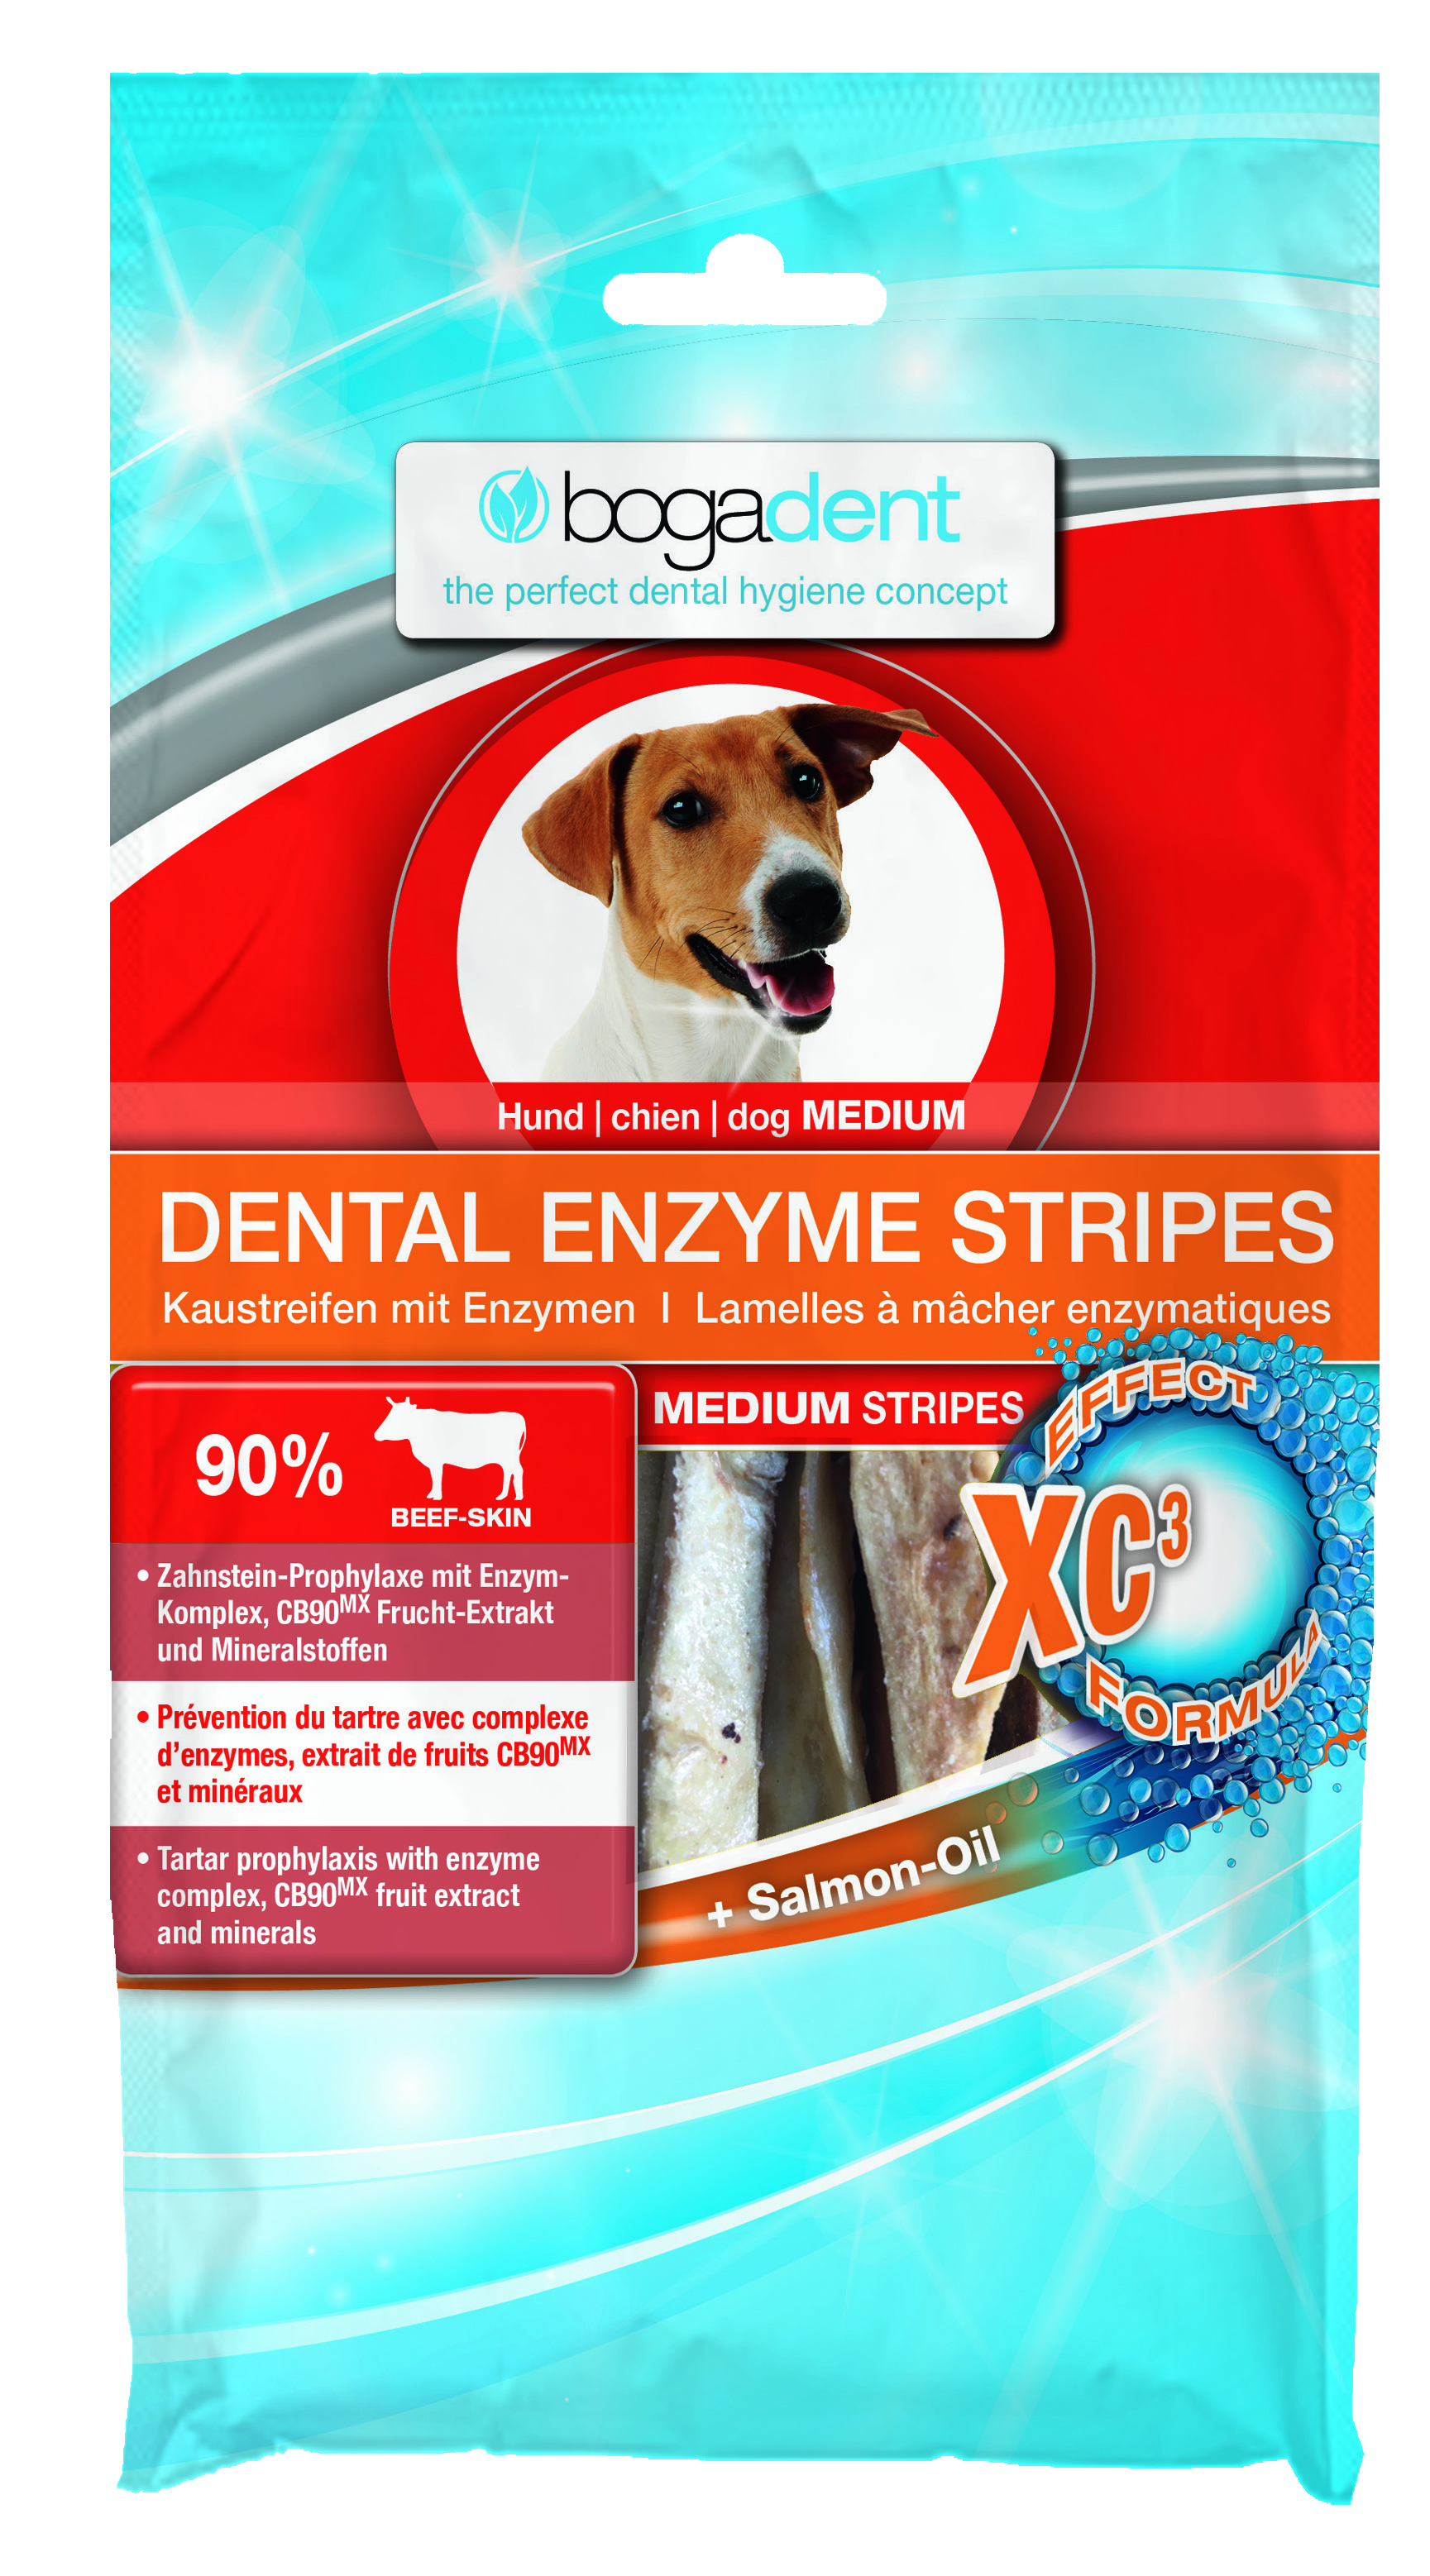 bogadent Dental Enzyme Stripes Hund medium 100g